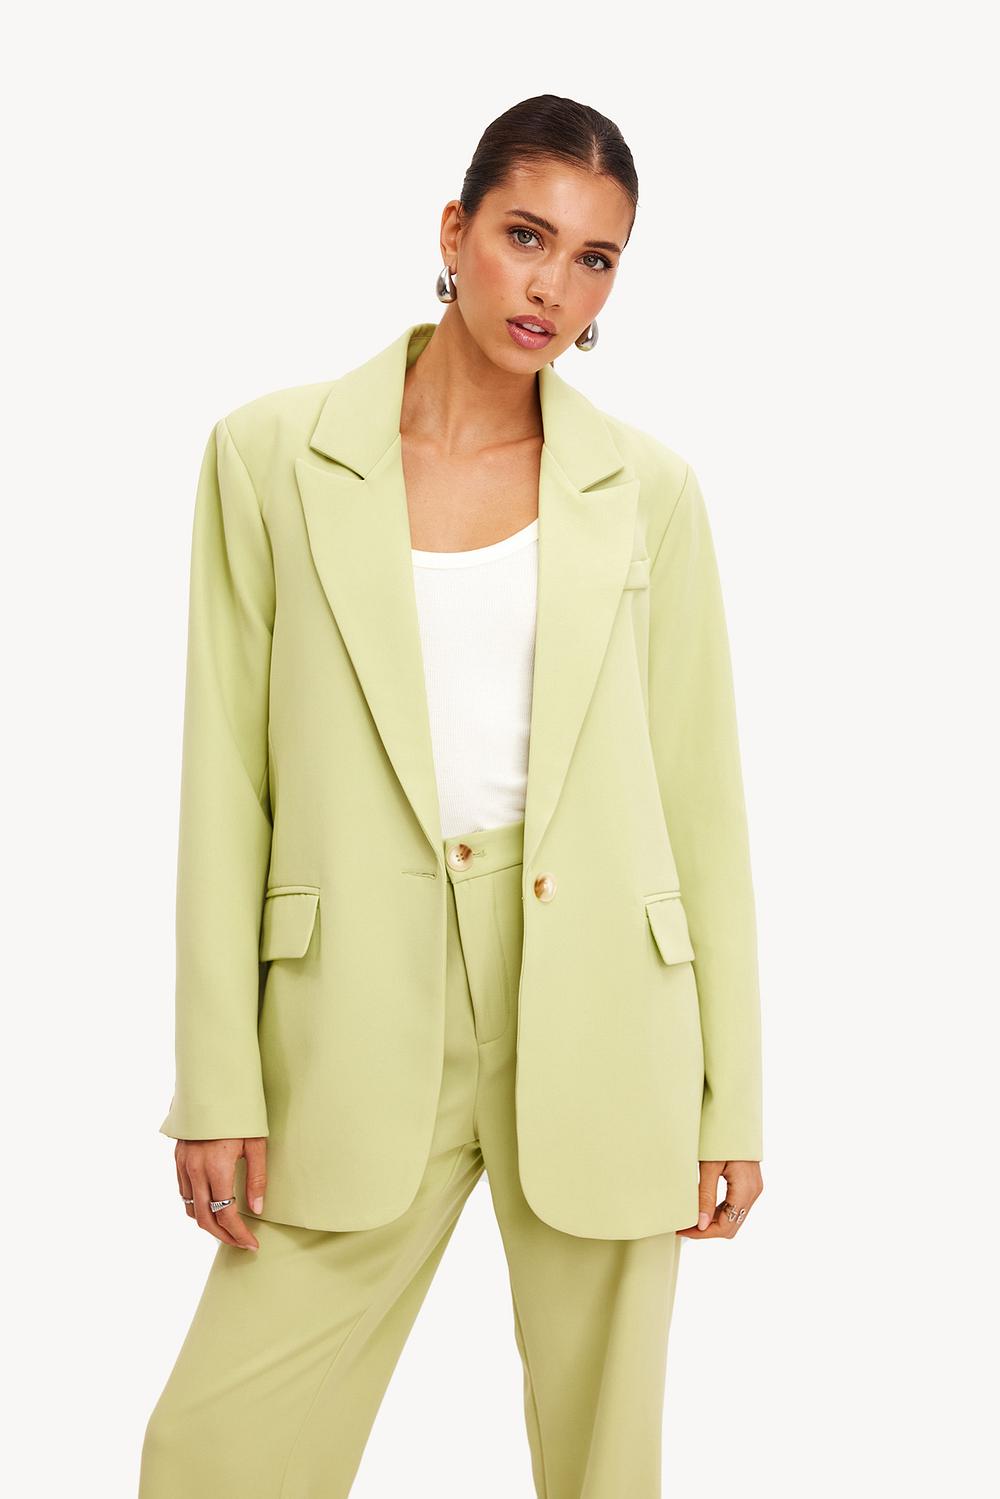 Mint green blazer